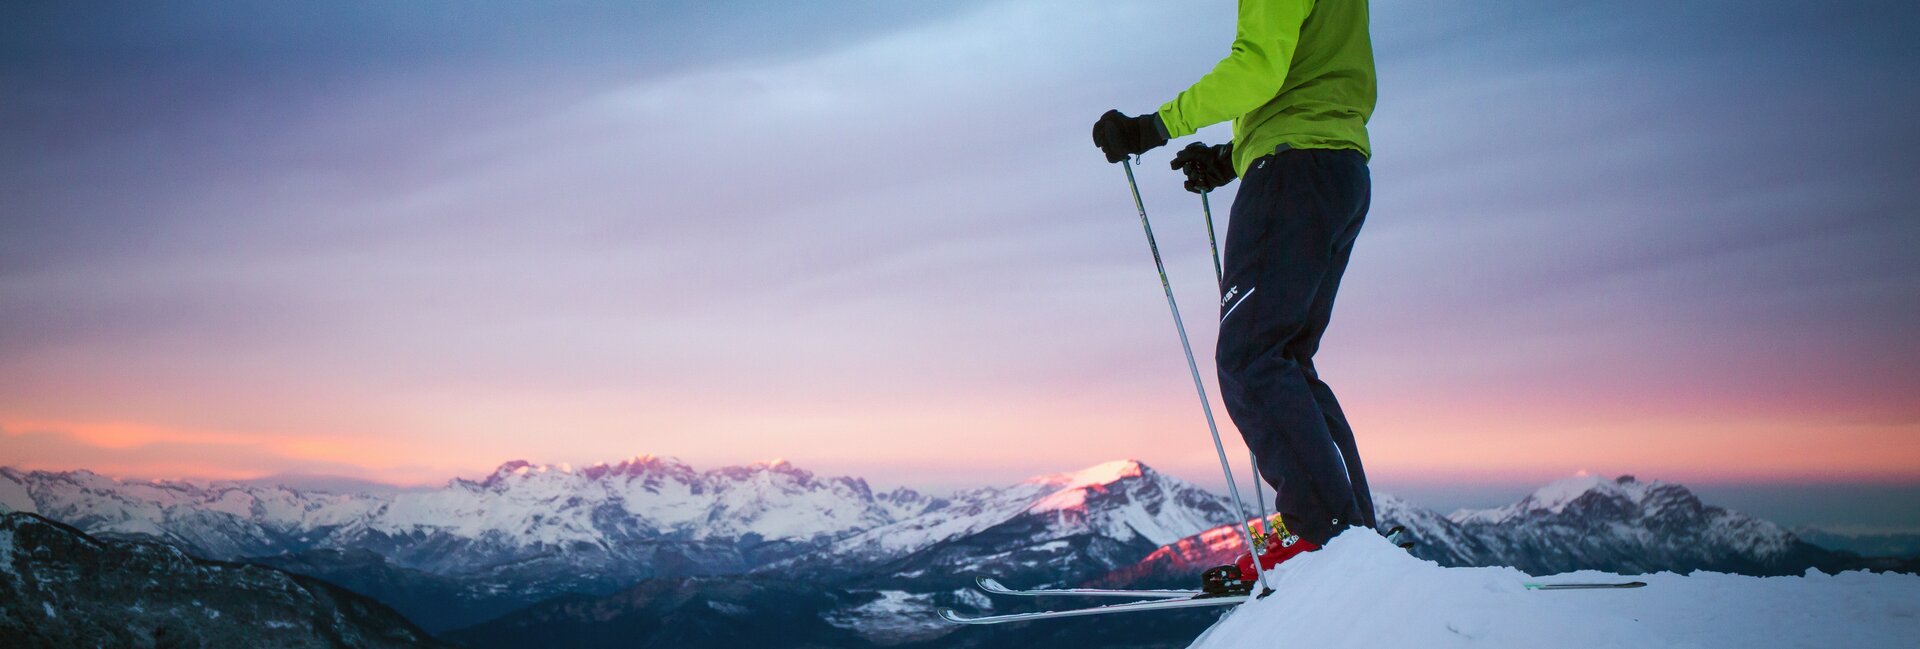 Obszar narciarski Polsa – San Valentino – San Giacomo